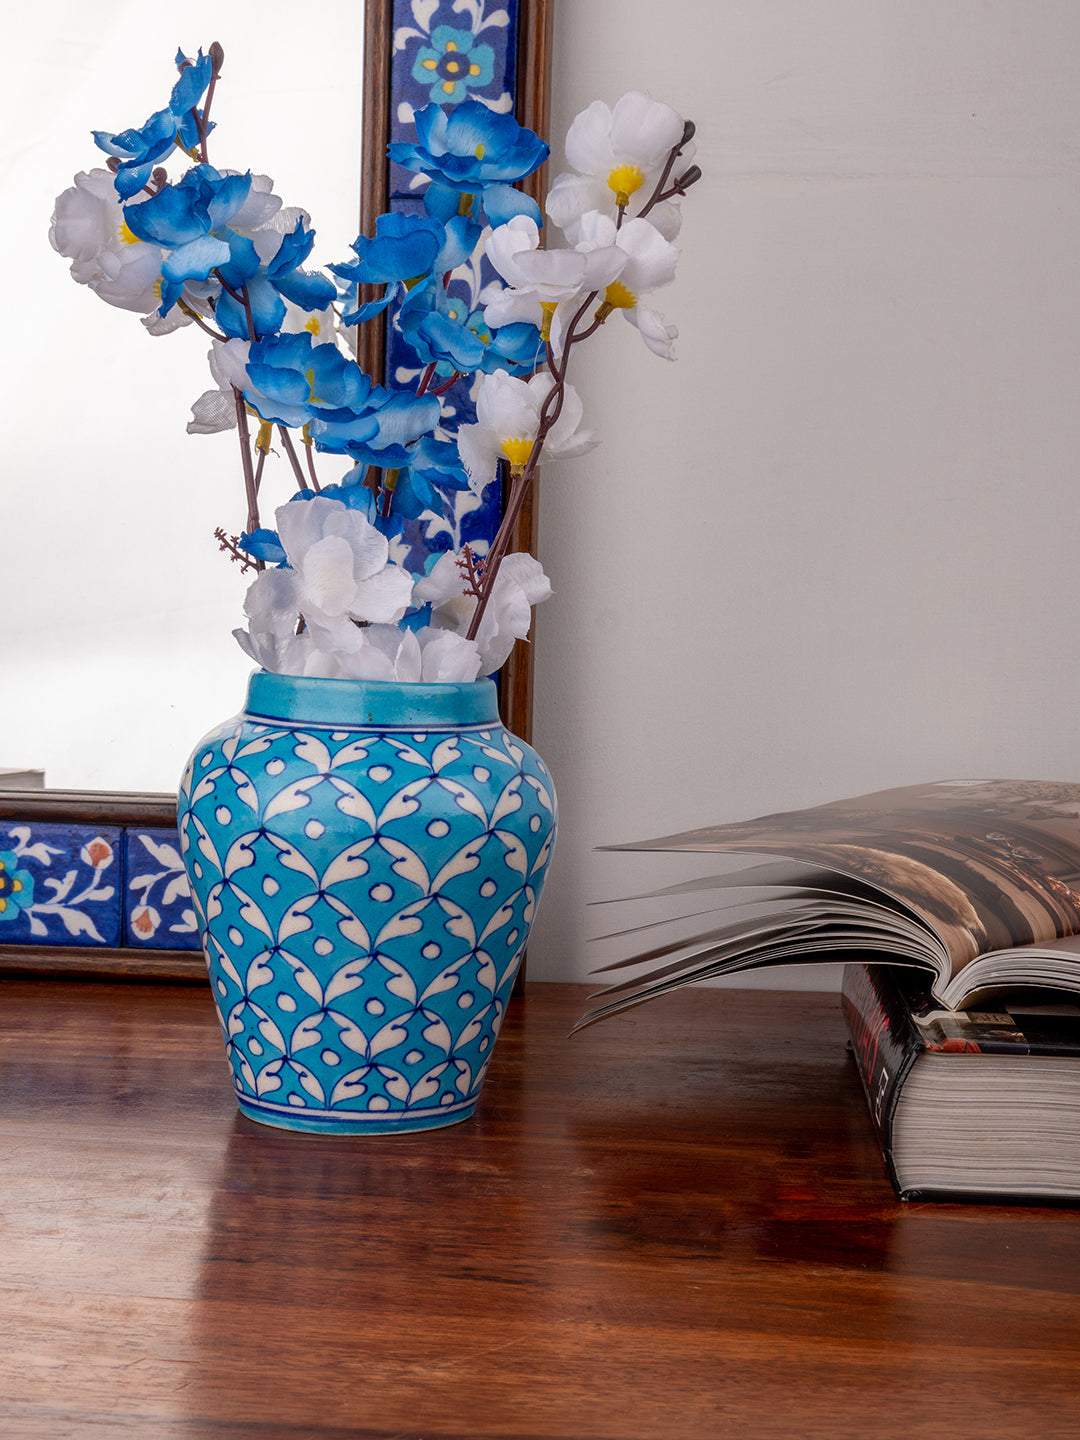 Glossy Blue & White Ceramic Flower Base, Size: Medium, Shape: Bottle Shaped  at Rs 1000 in Kolkata